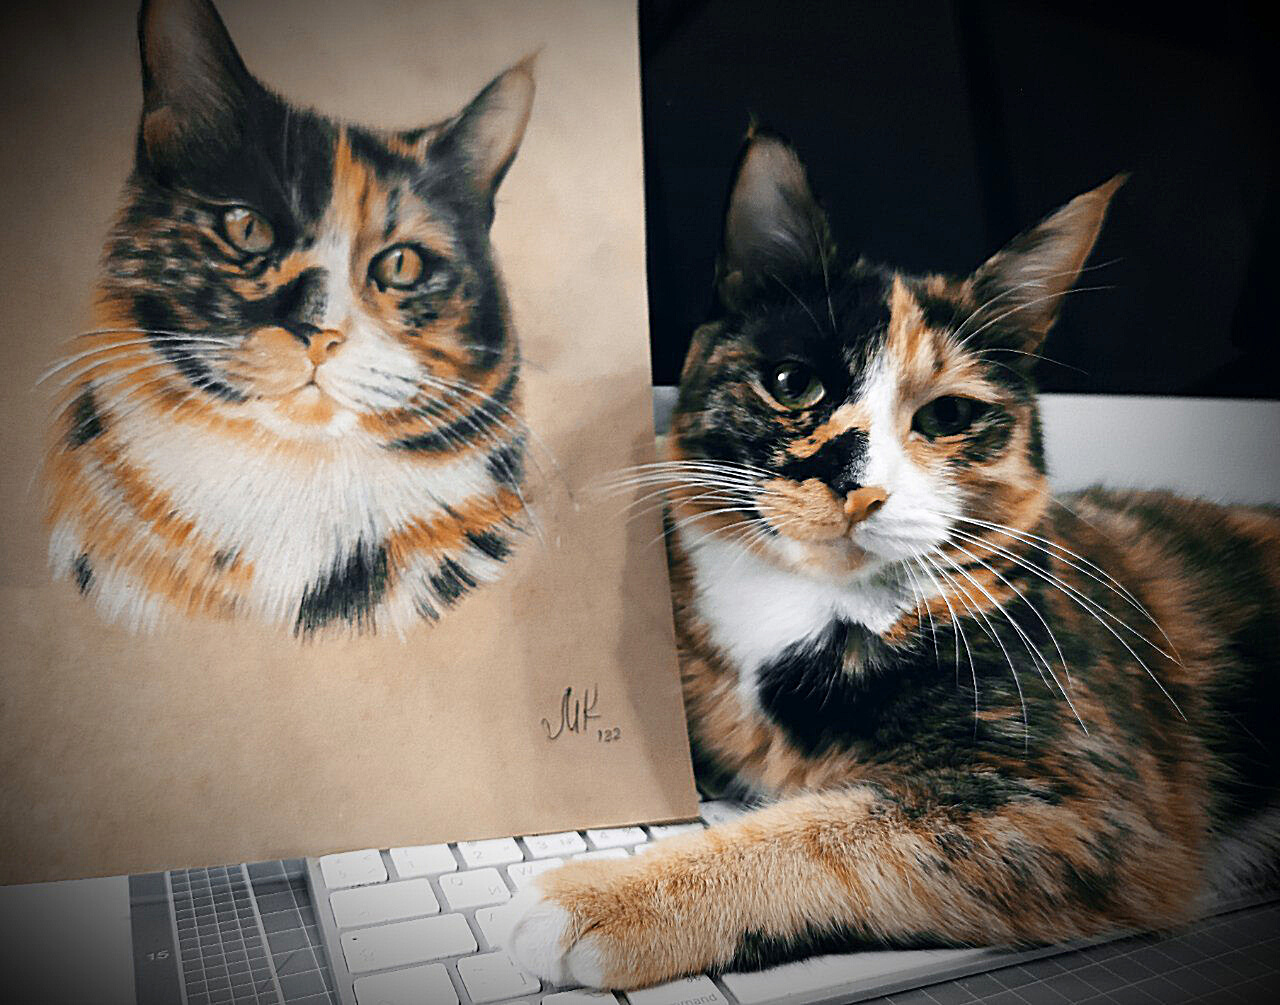 Customer with his portrait - My, cat, Portrait, Pencil drawing, Drawing, Colour pencils, Artist, Pets, Tricolor cat, Portrait by photo